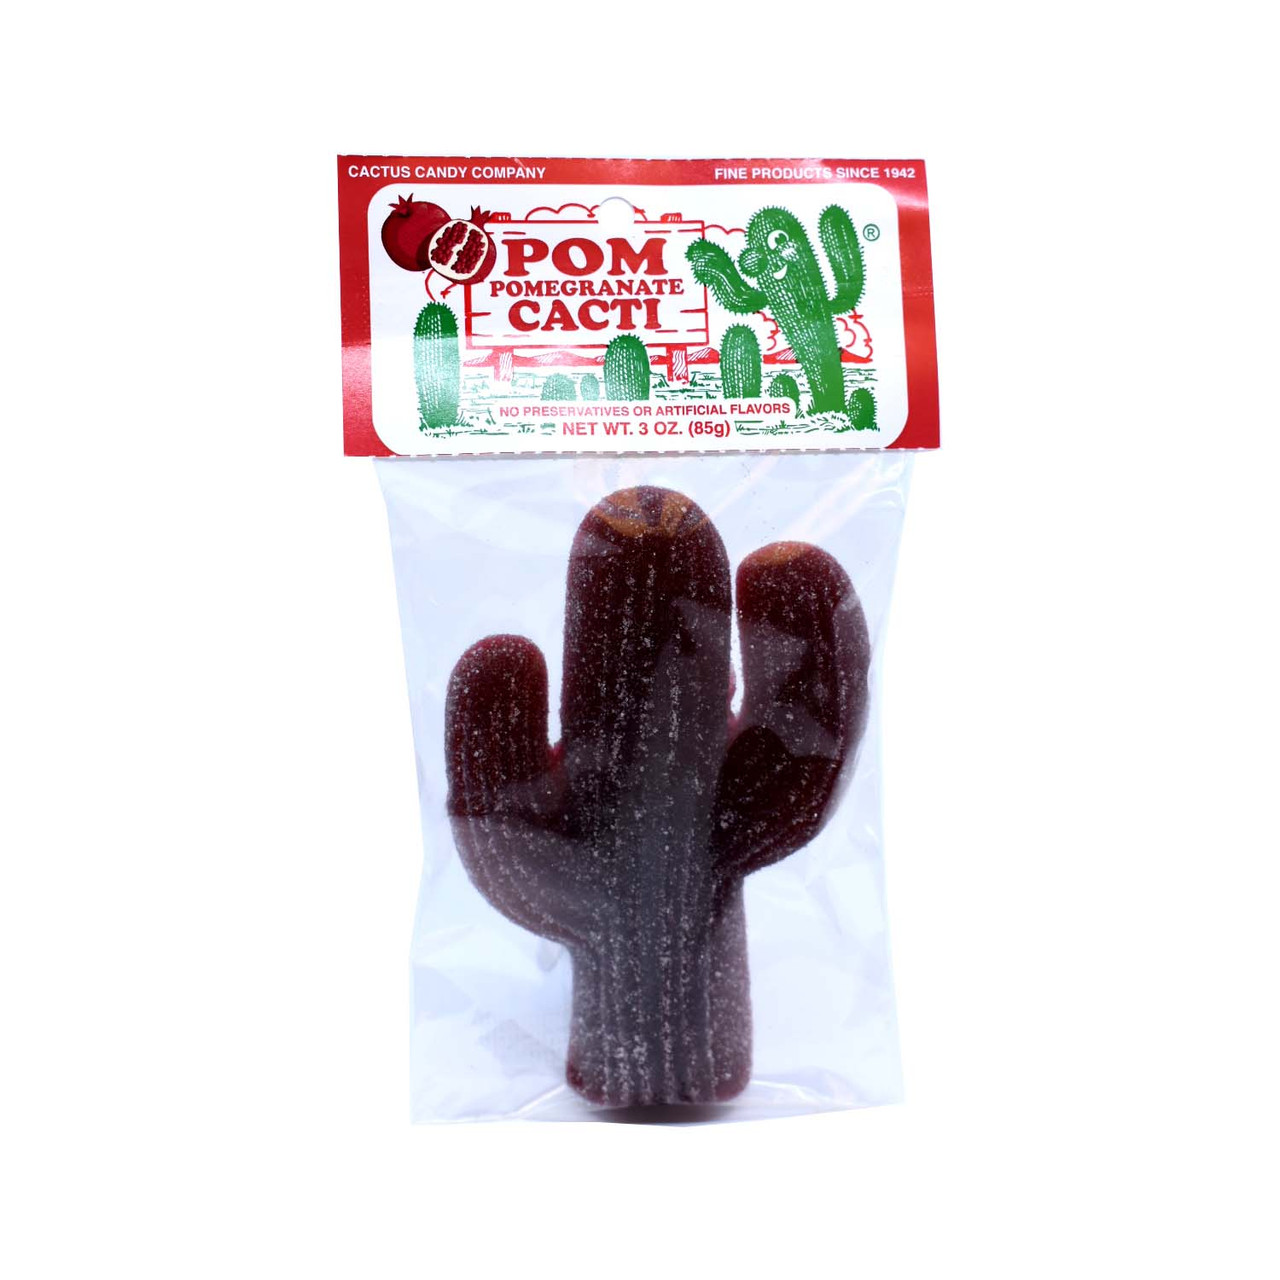 Poemgranate Cacti